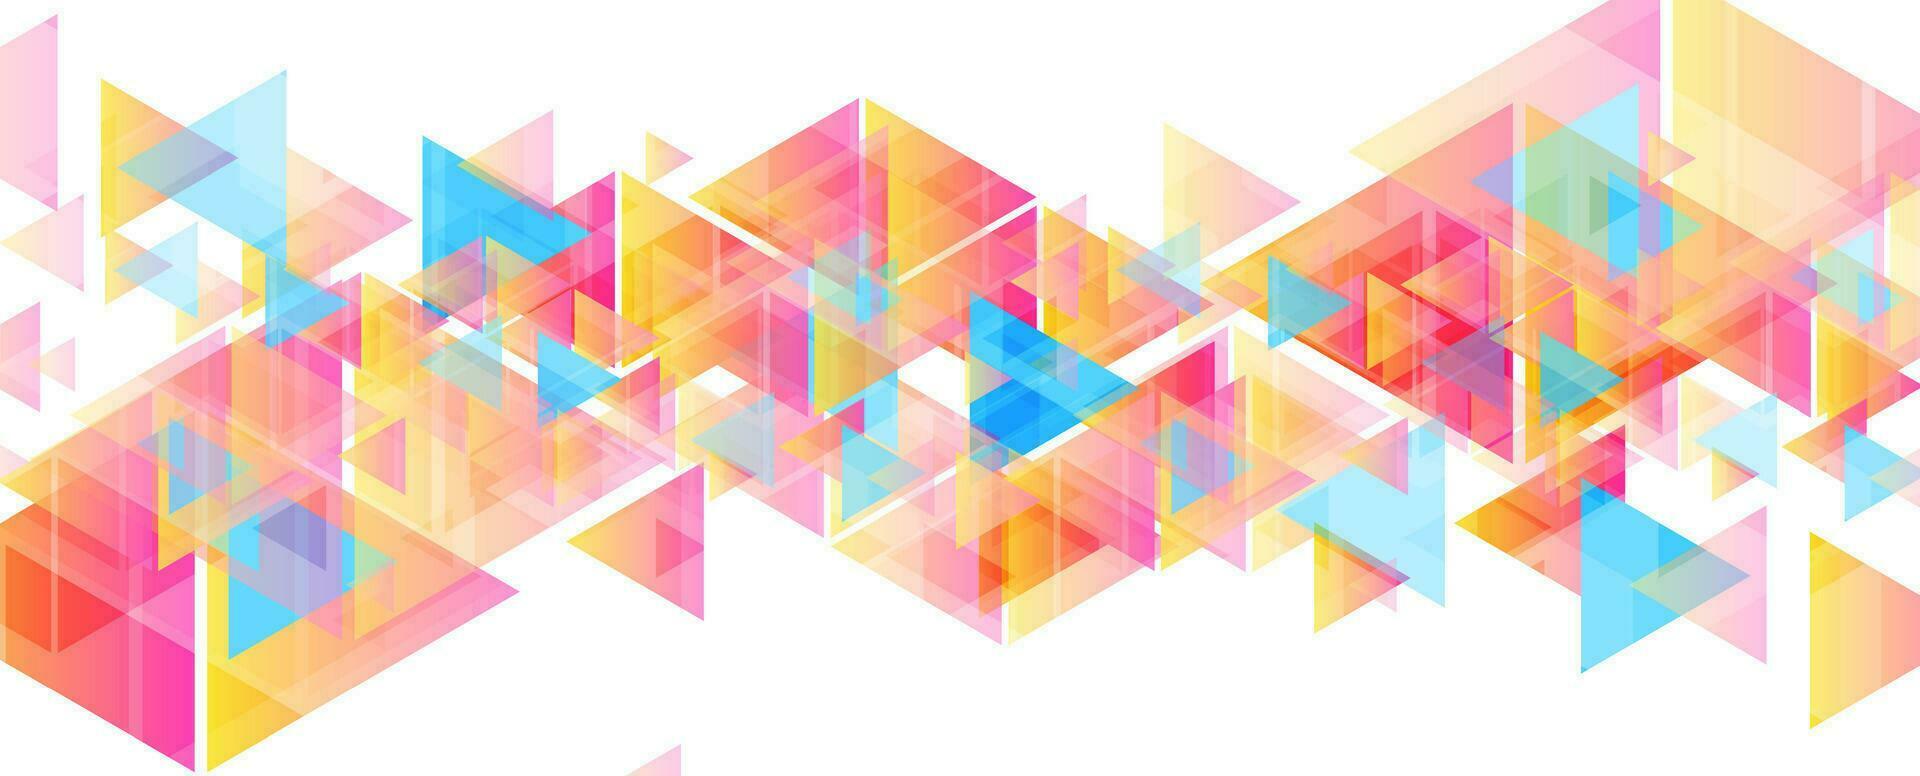 bunt Pastell- Dreiecke abstrakt Technik niedrig poly Hintergrund vektor